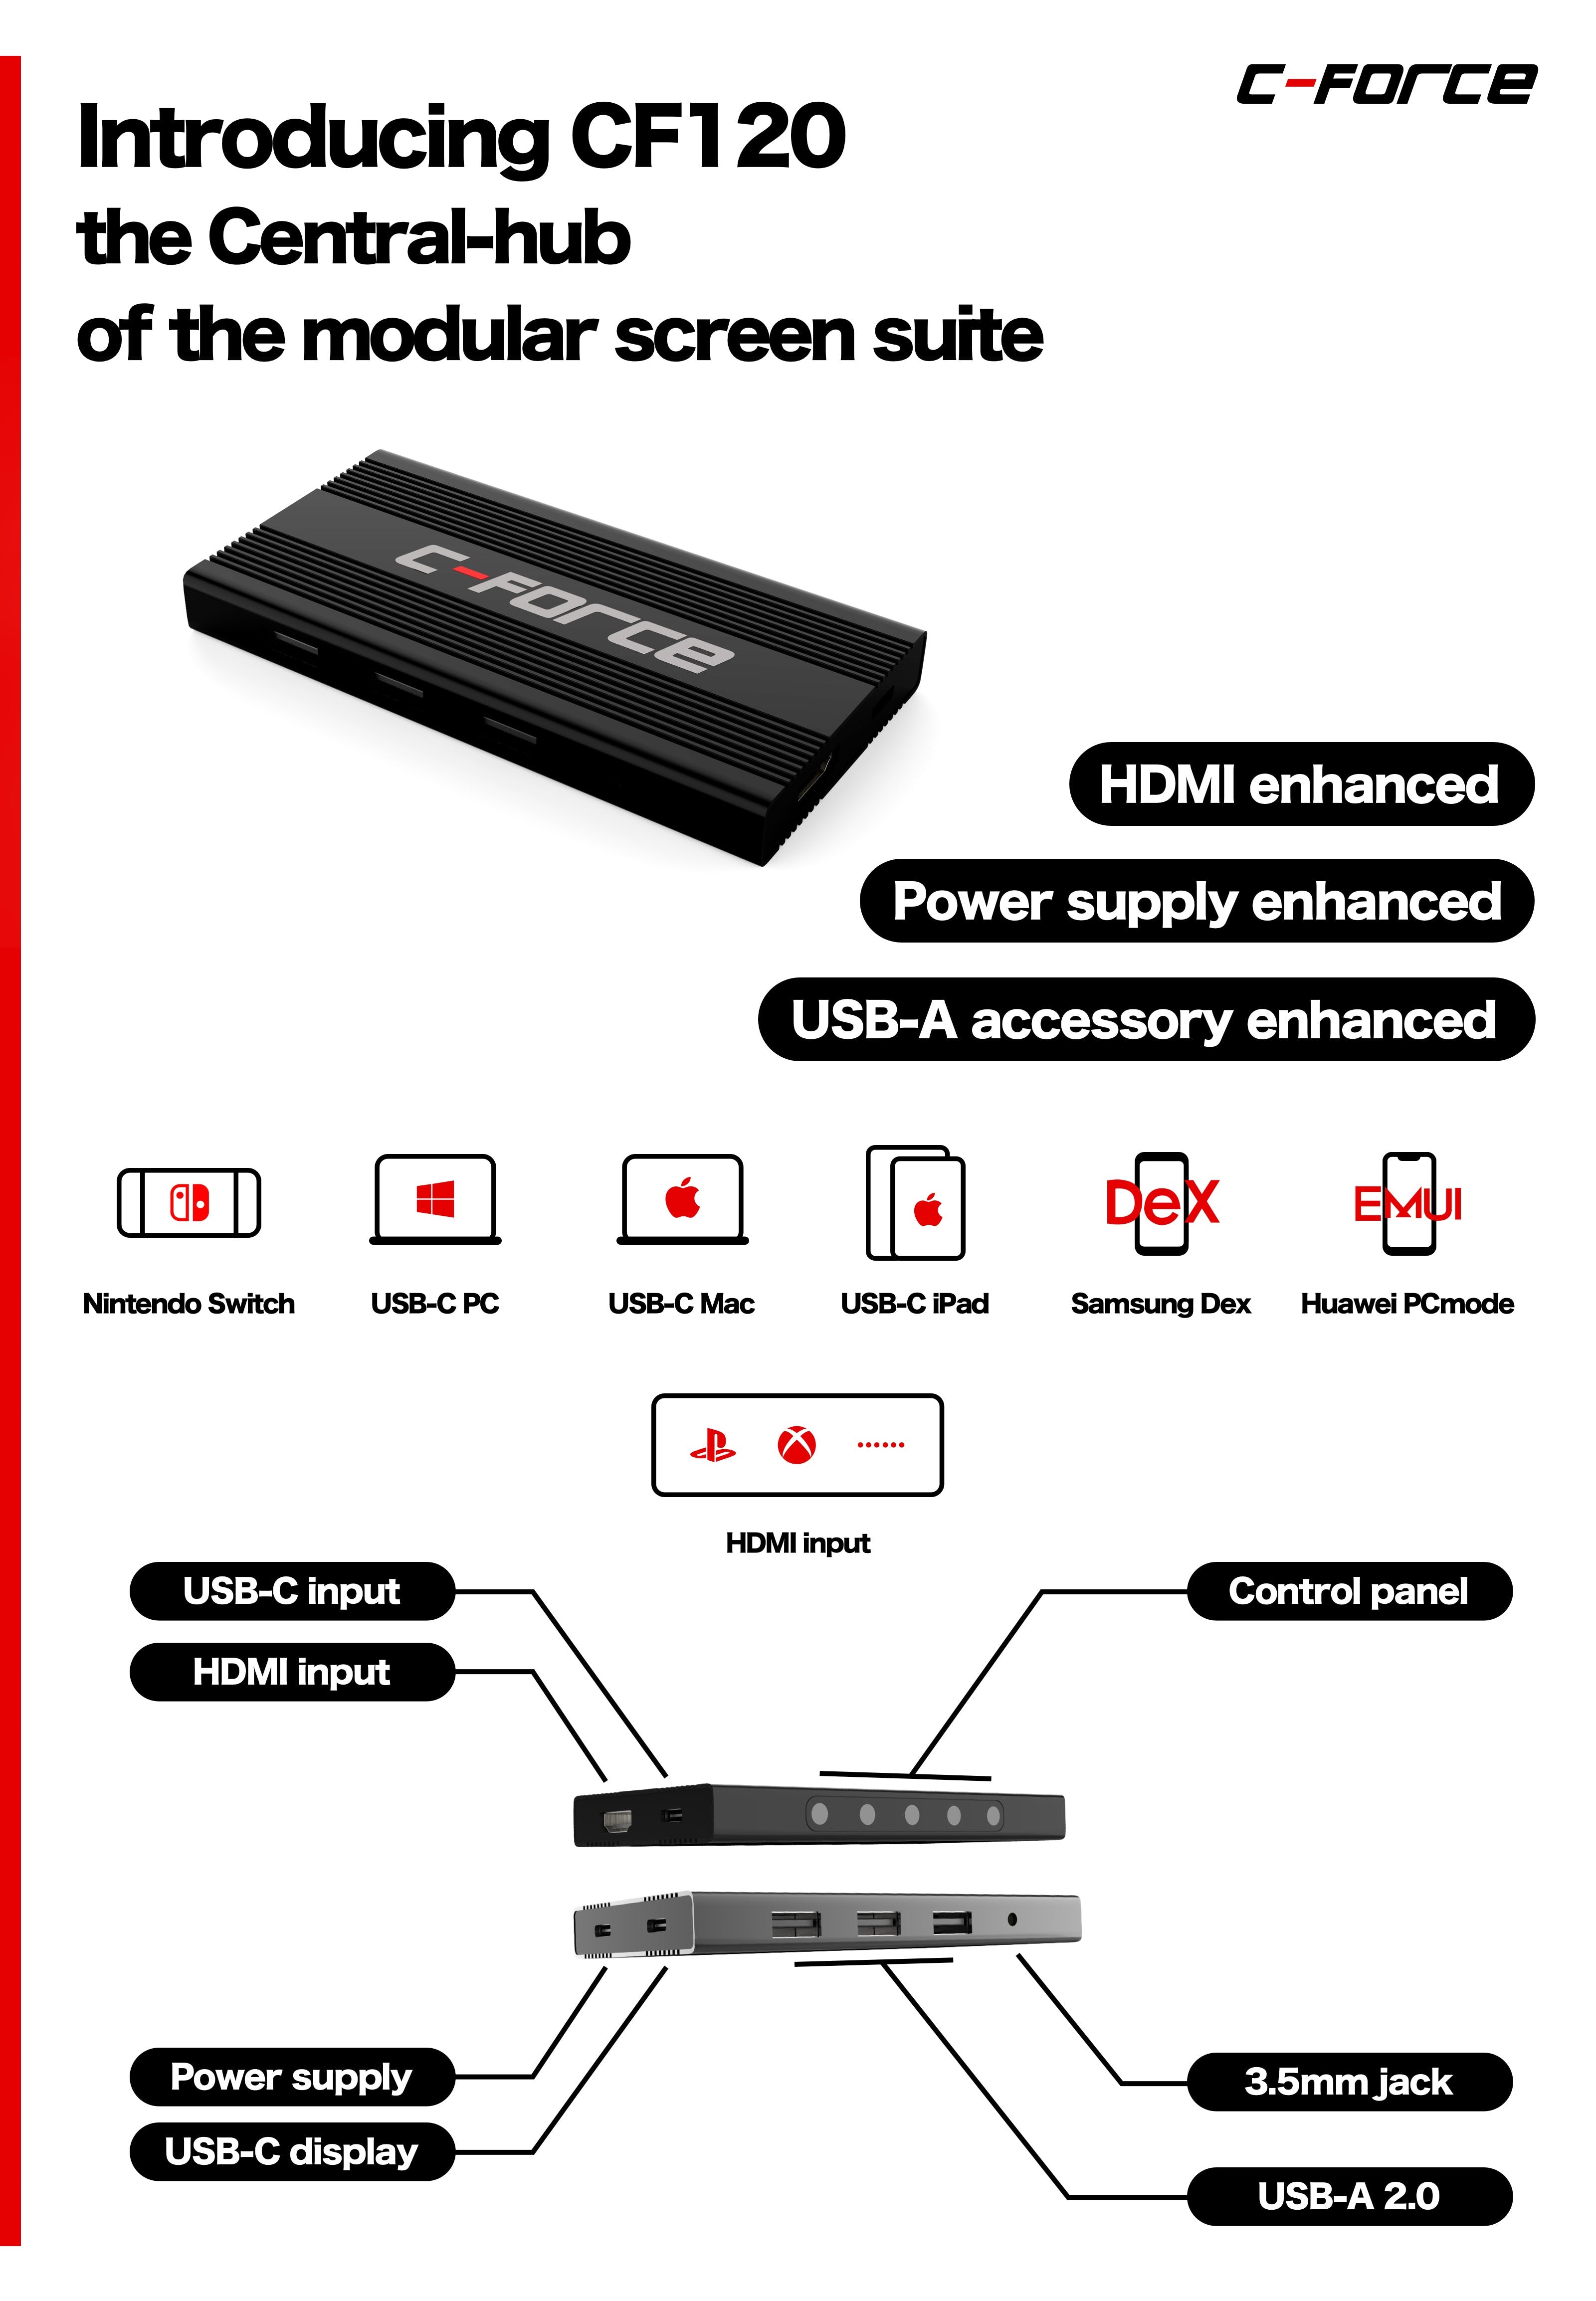 C-FORCE the thinnest 4K USB-C display media 1